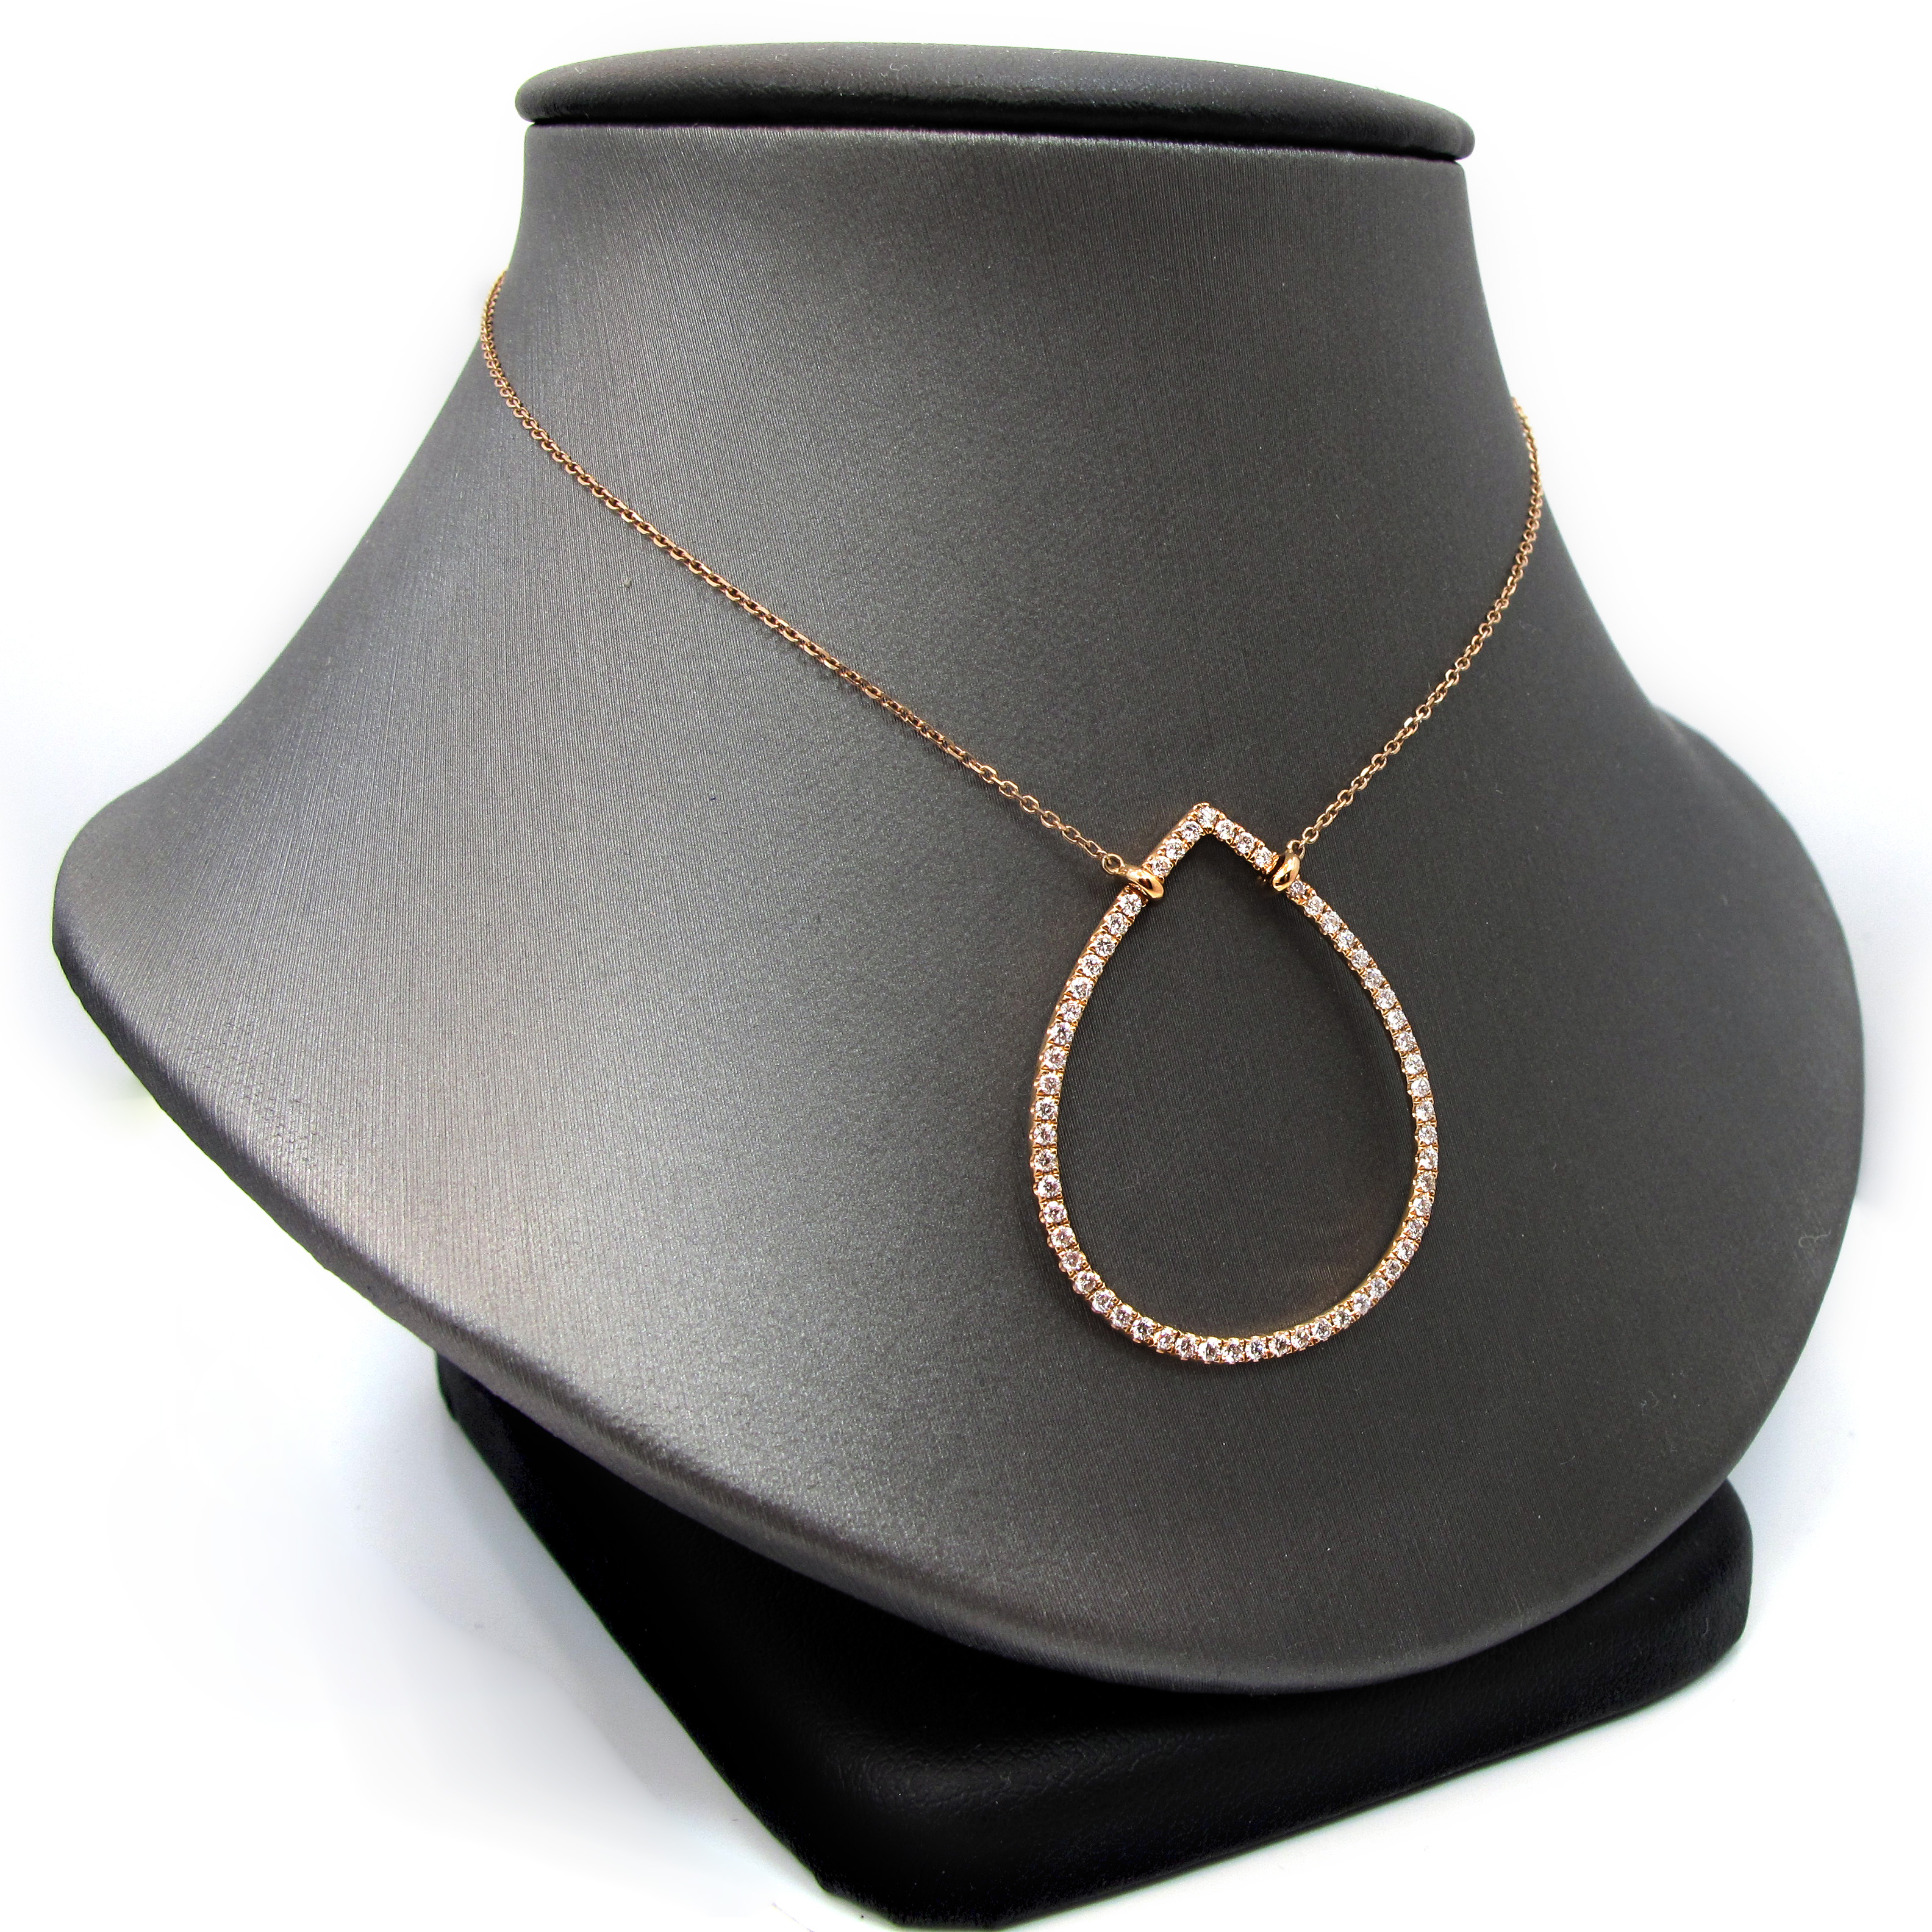 Diamond teardrop necklace set in 18k rose gold